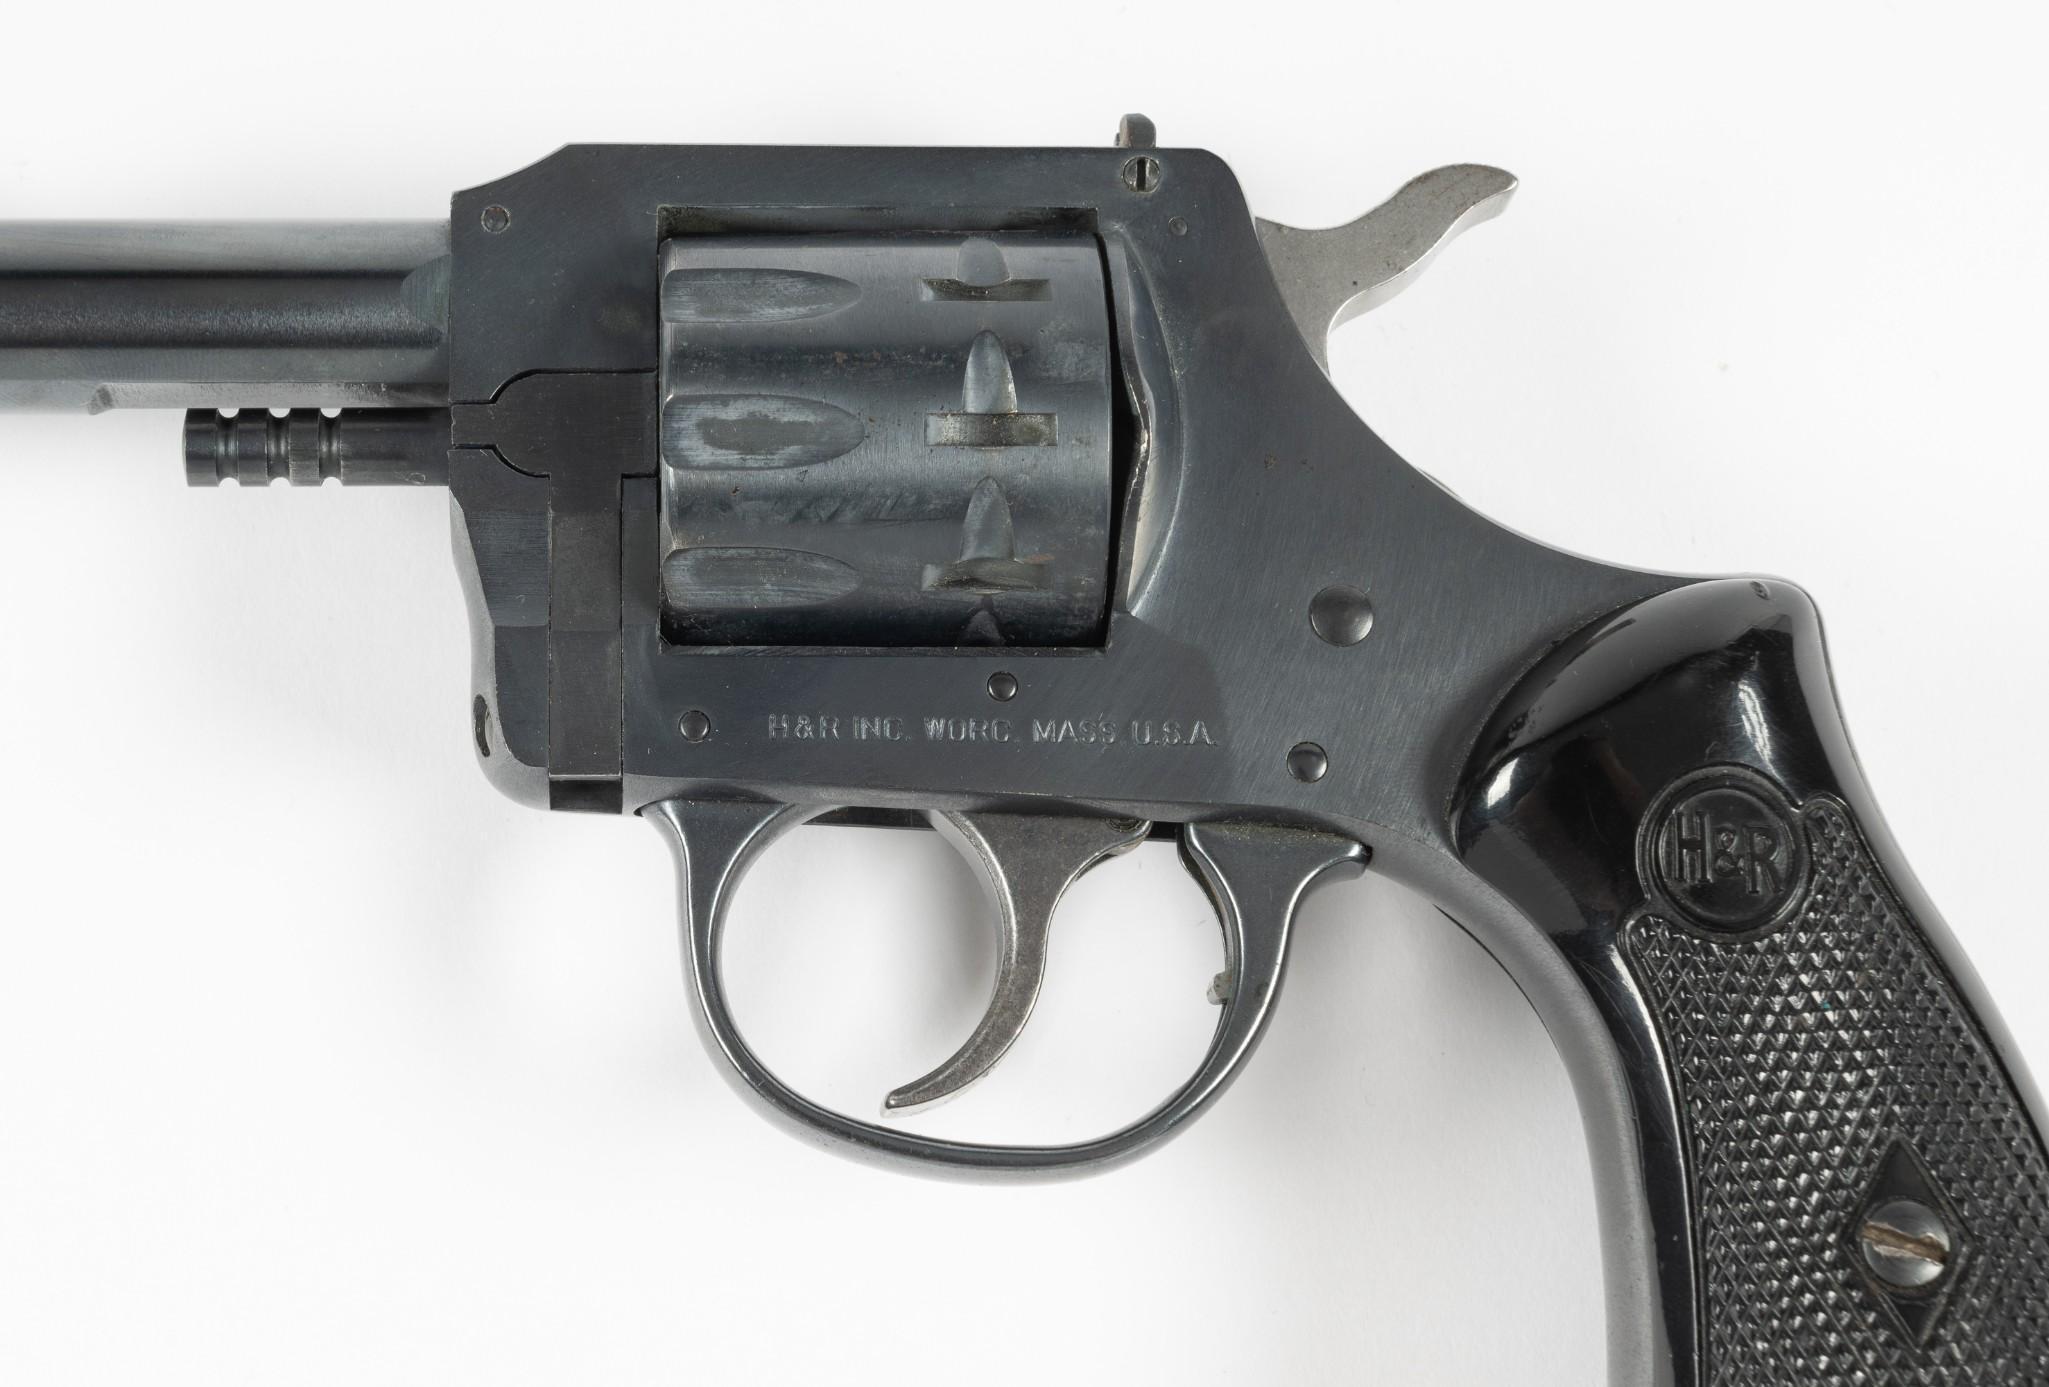 H&R Model 929 Double Action Revolver, Caliber .22